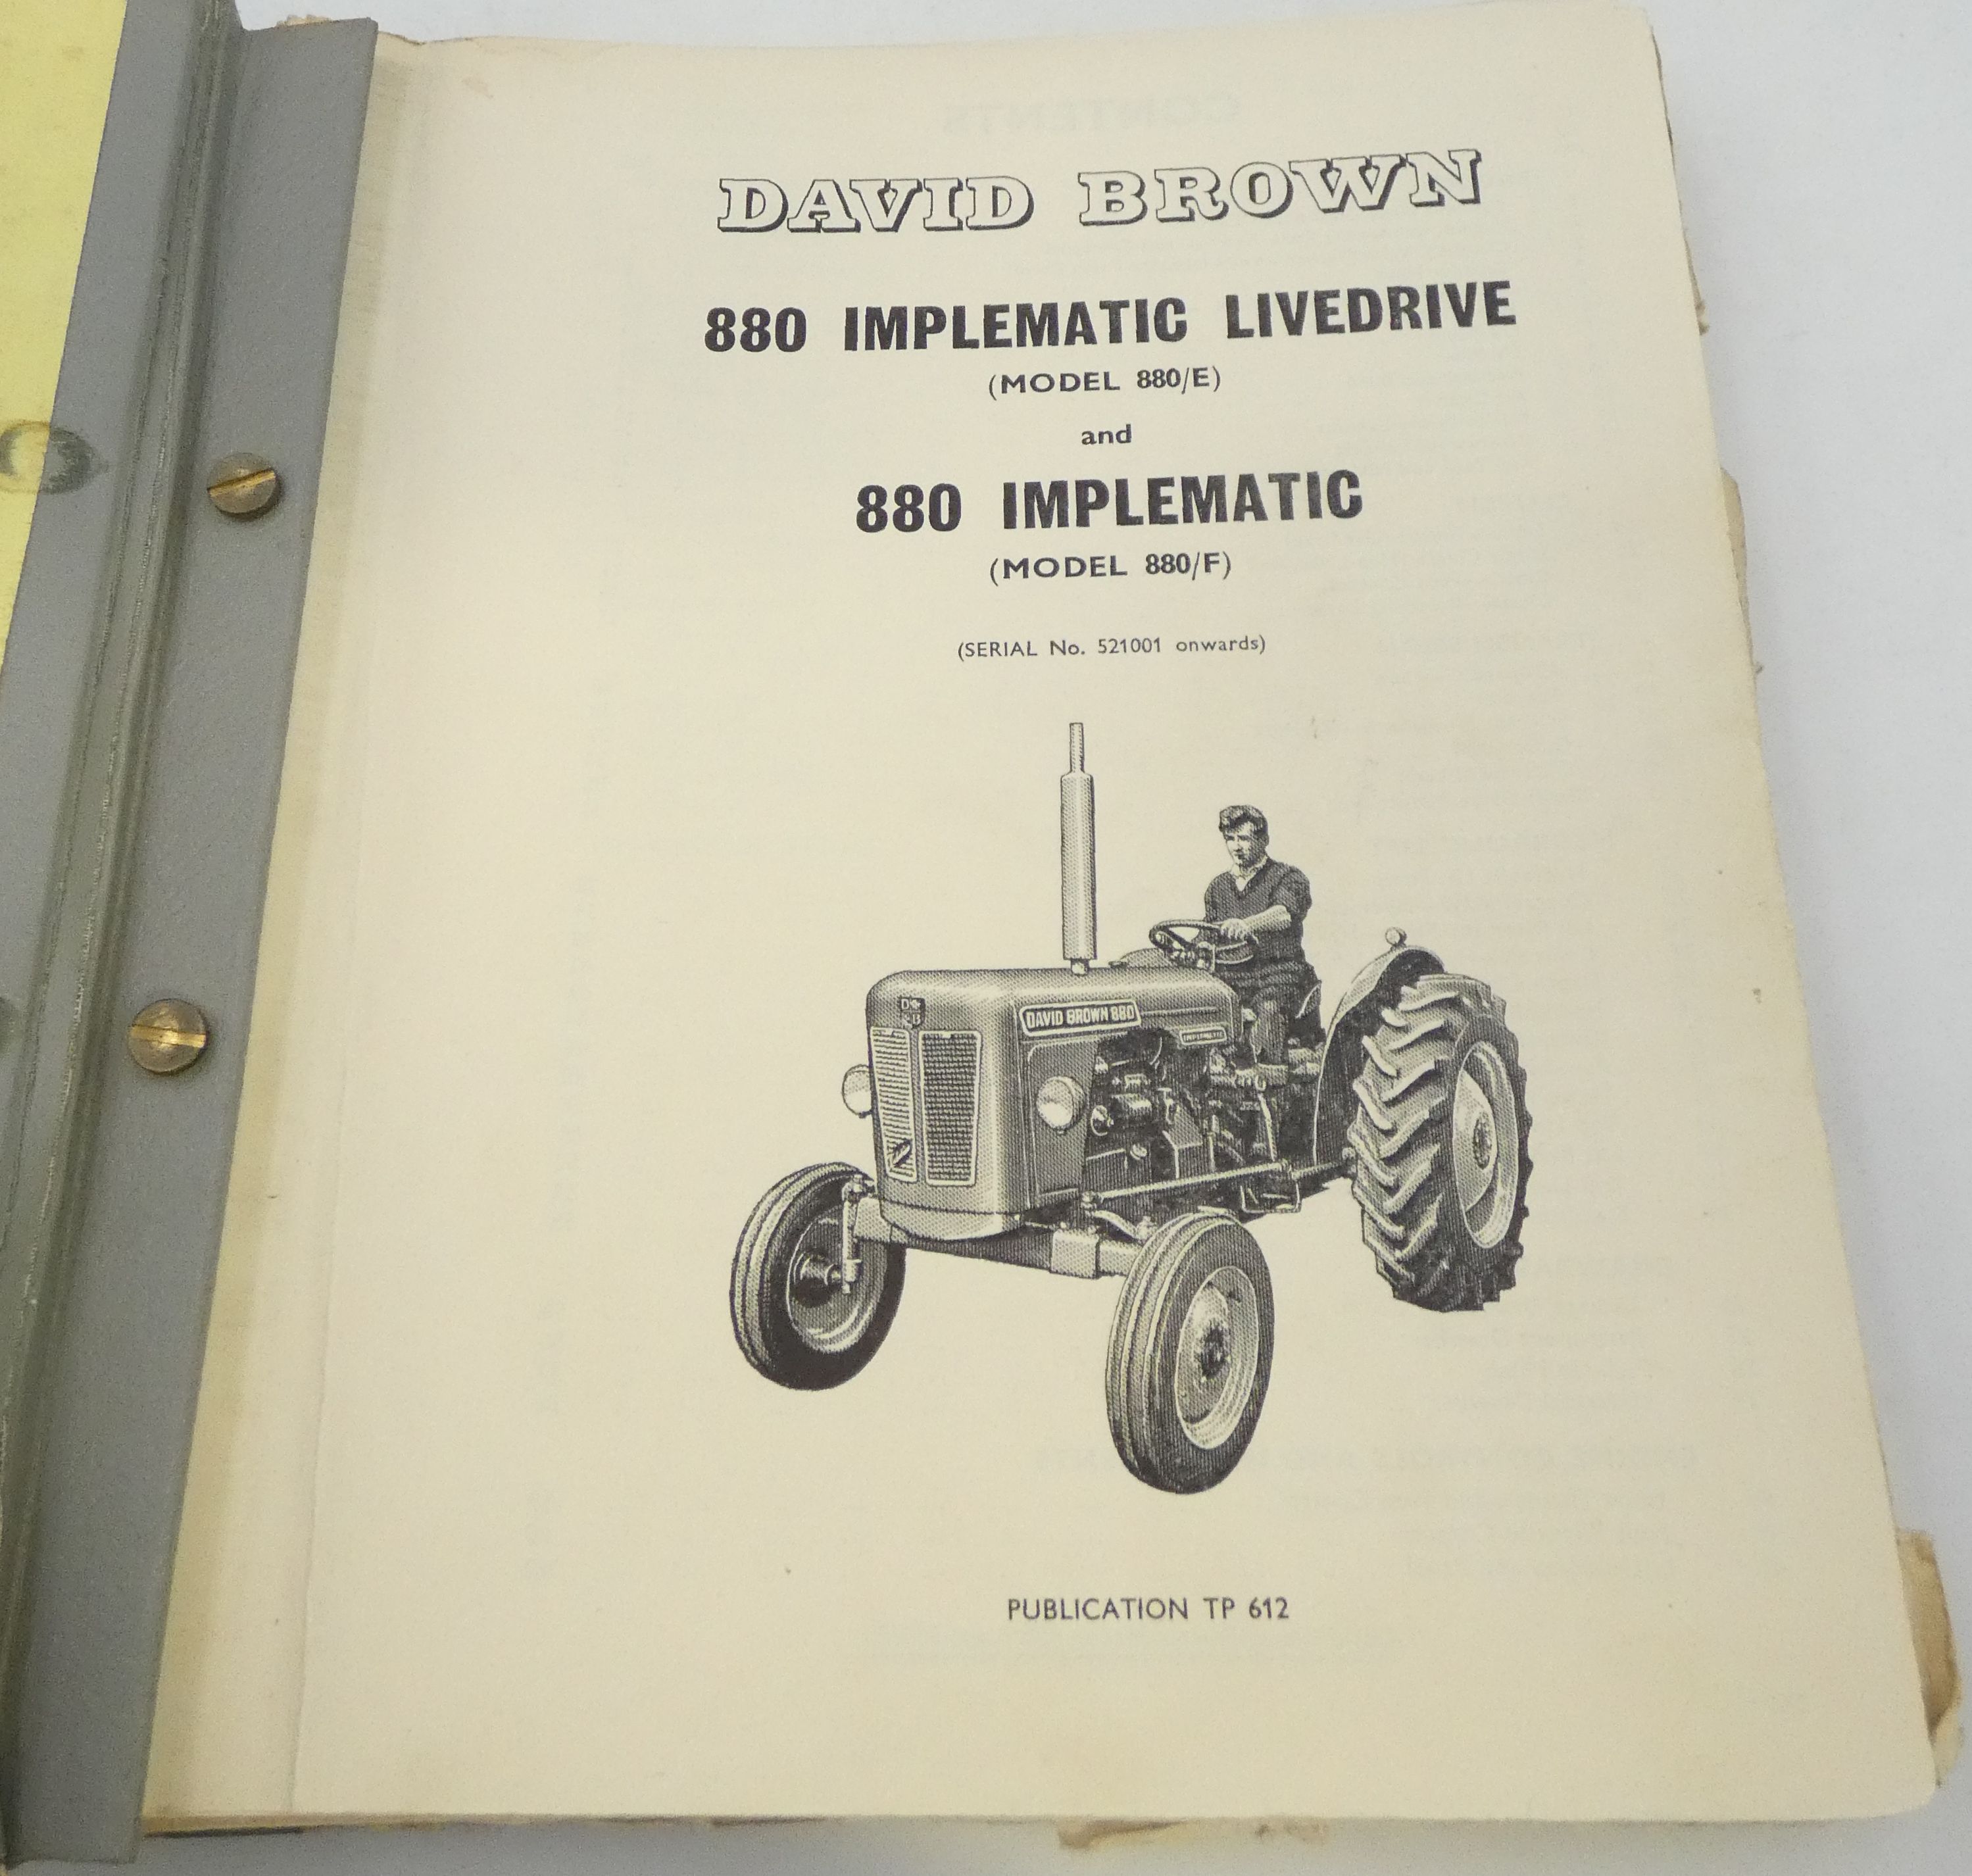 David Brown 880 implematic livedrive (model 880/E)/implematic (model 880/F) + 990 selectamatic (model 990/E) parts catalogue